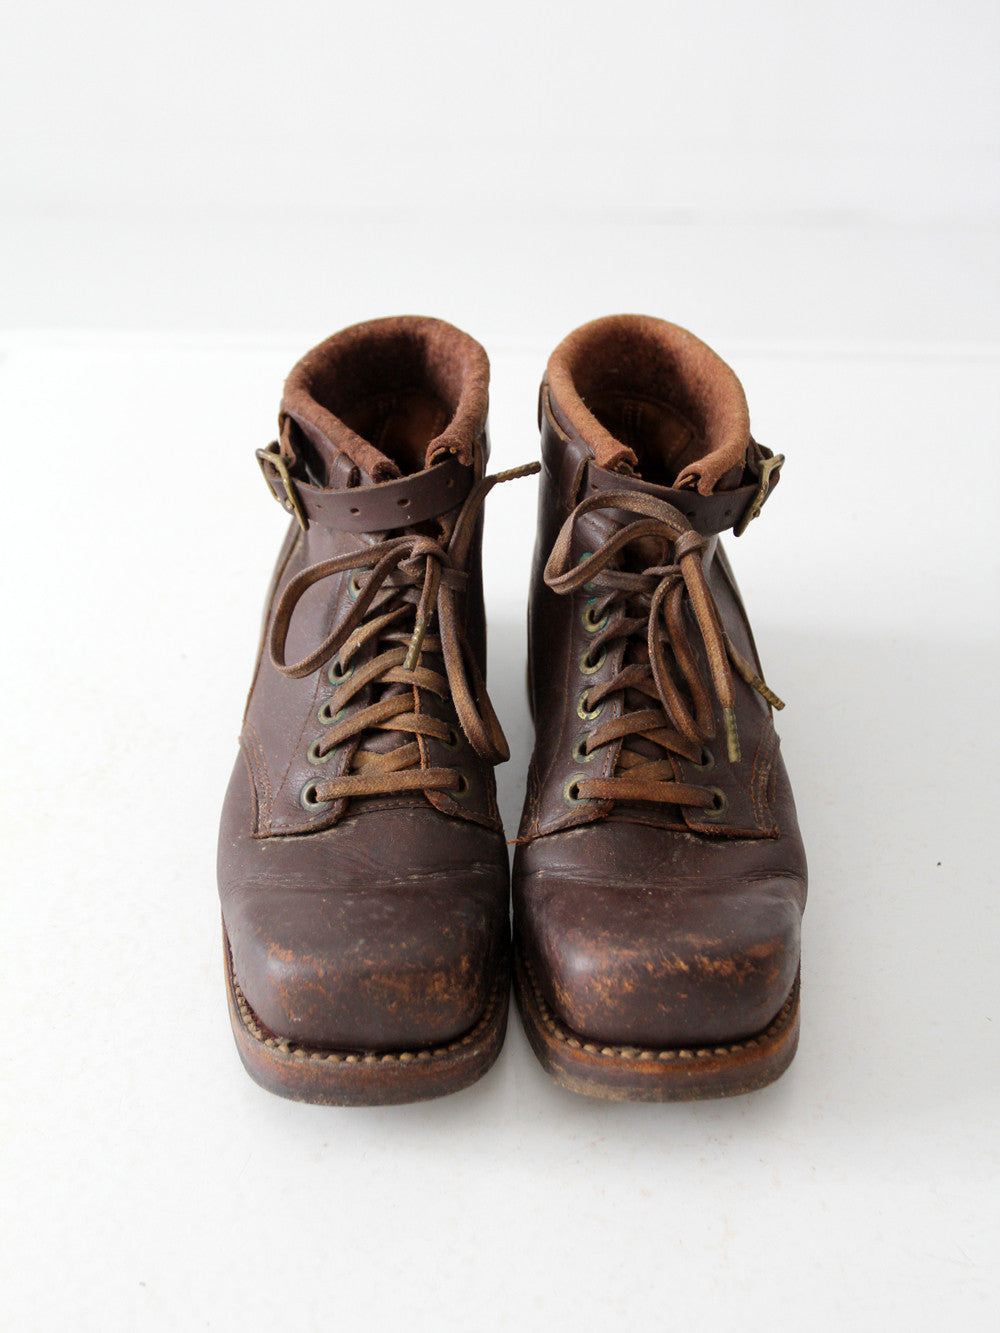 vintage leather ski boots, men's size 9.5